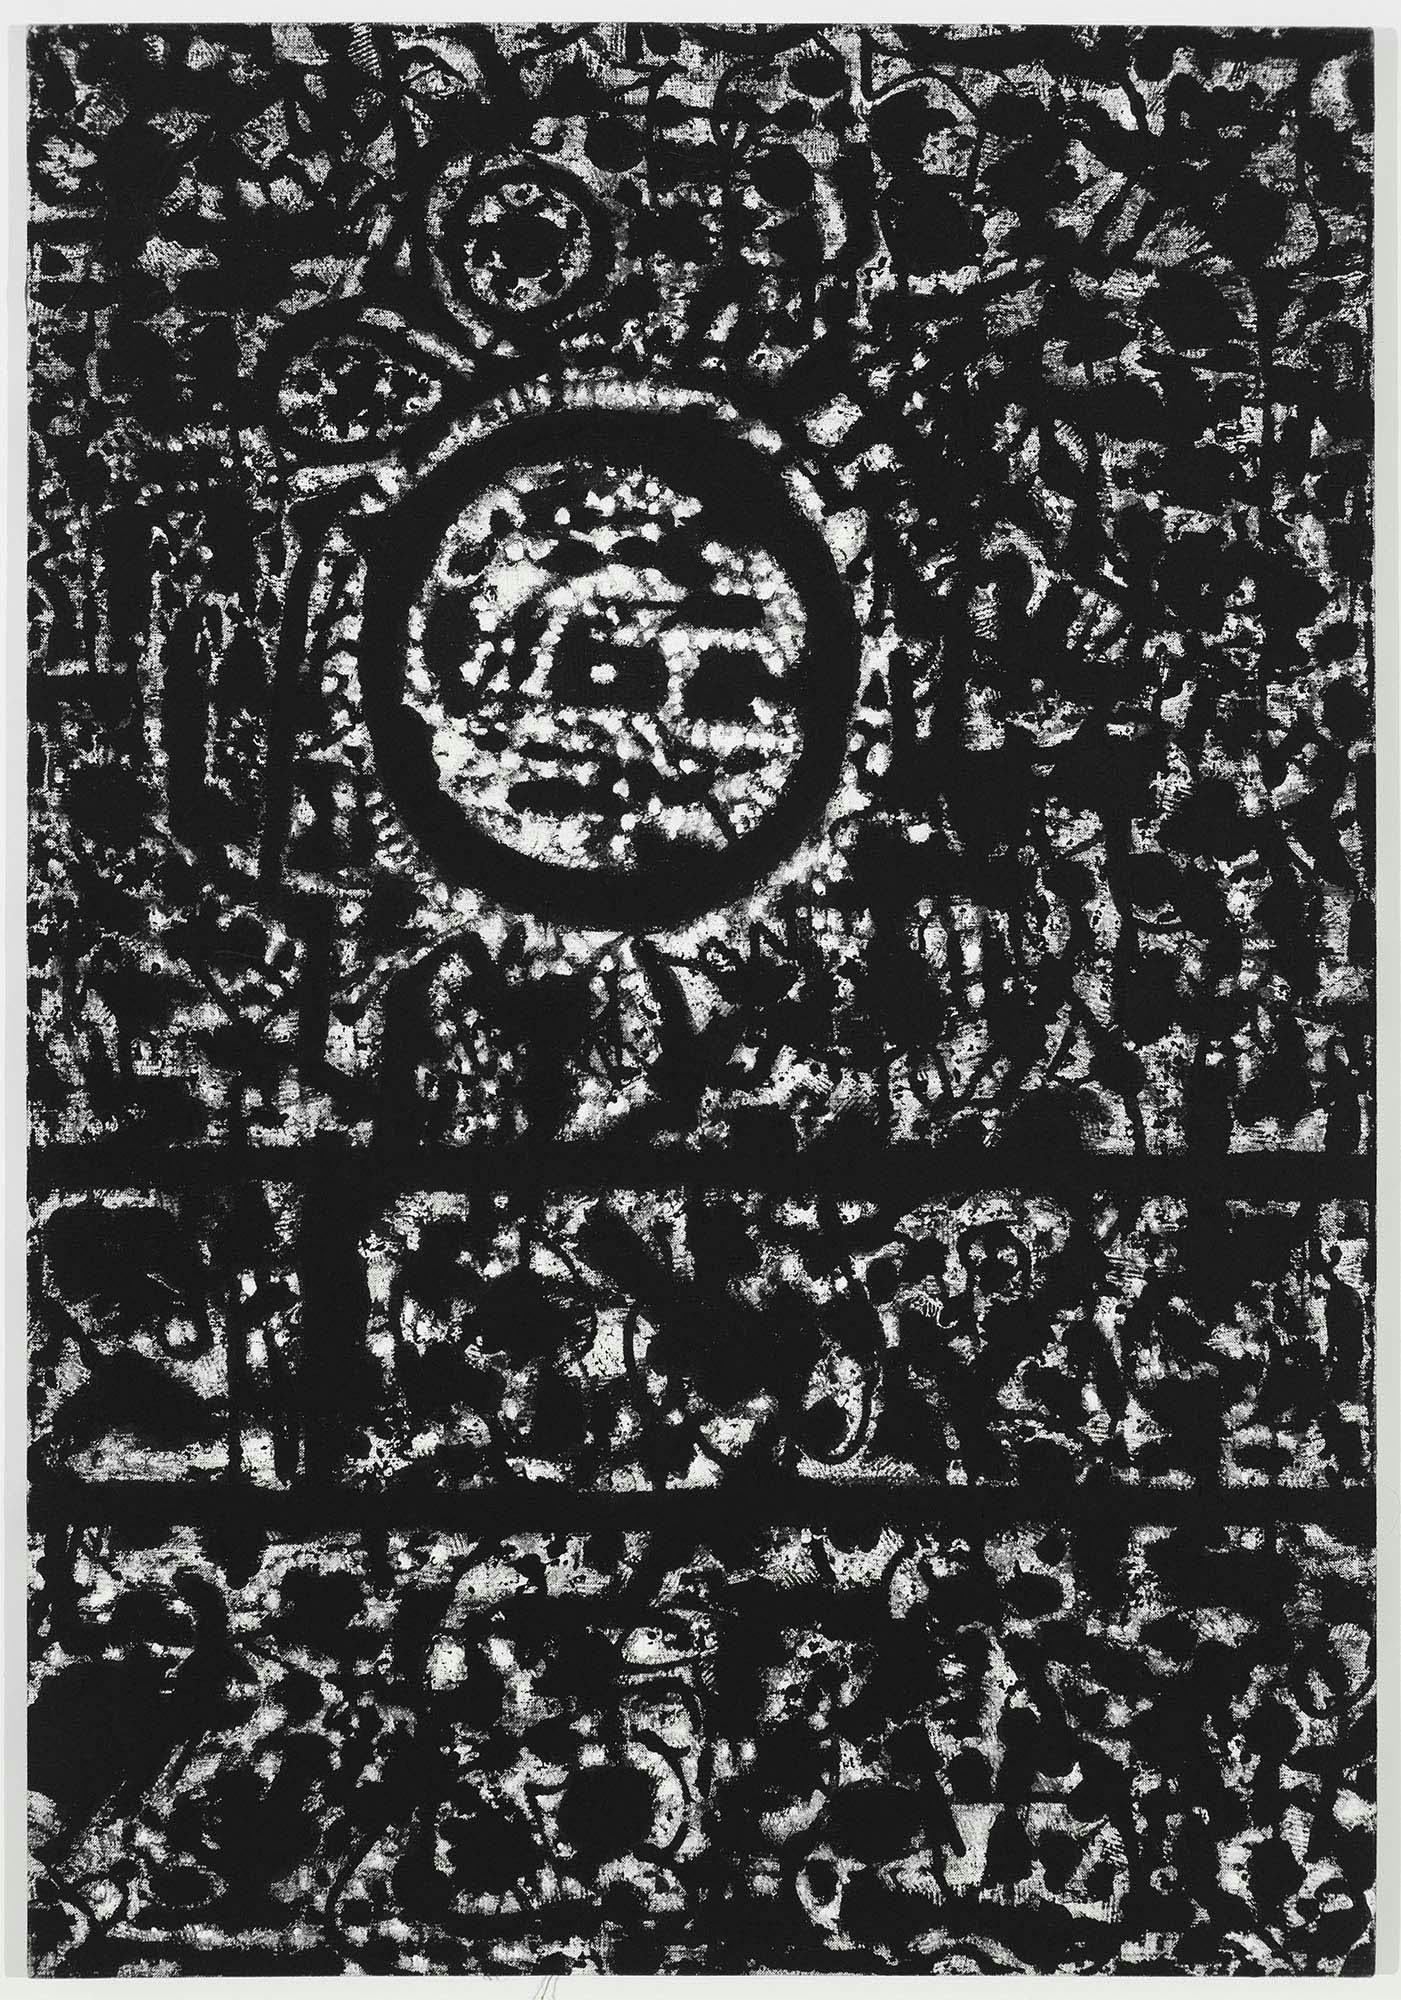 Black Horizons
1978–80
Acrylic on linen
72 x 50 in. (182.9 x 127 cm)
 – The Richard Pousette-Dart Foundation